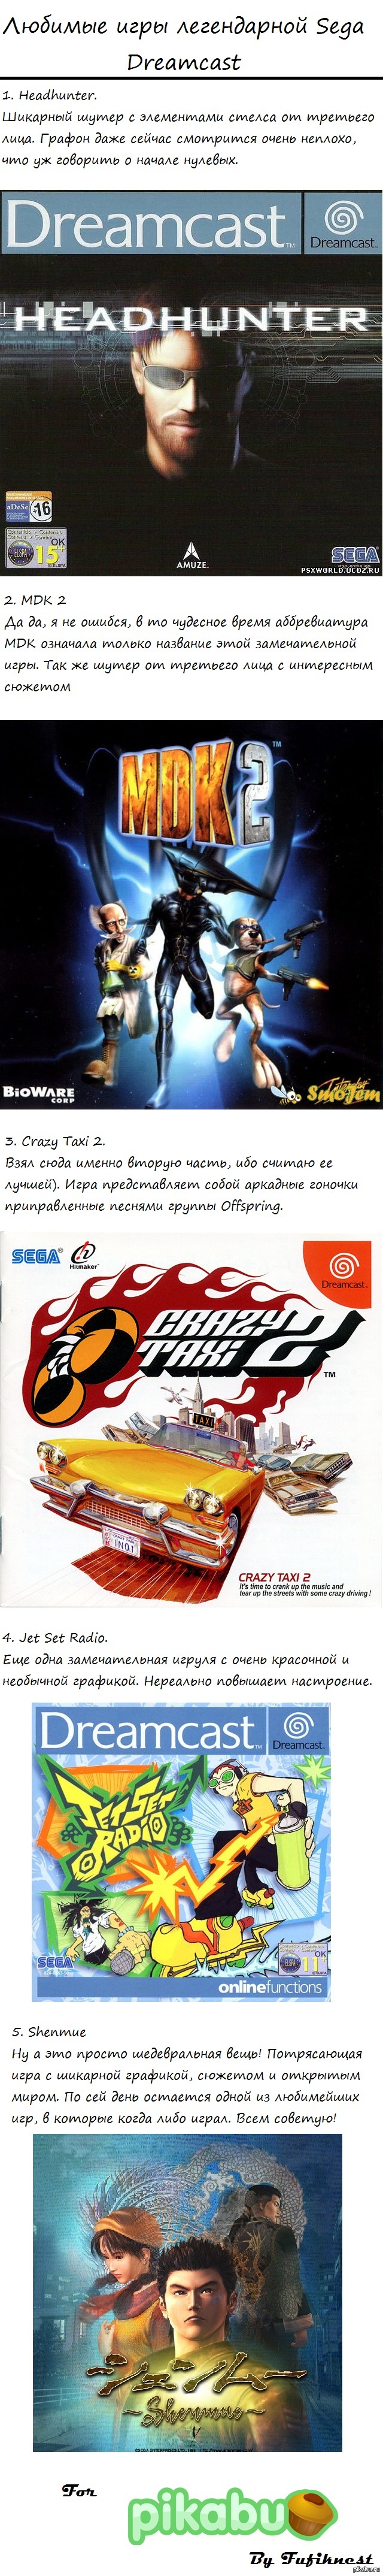   Dreamcast 